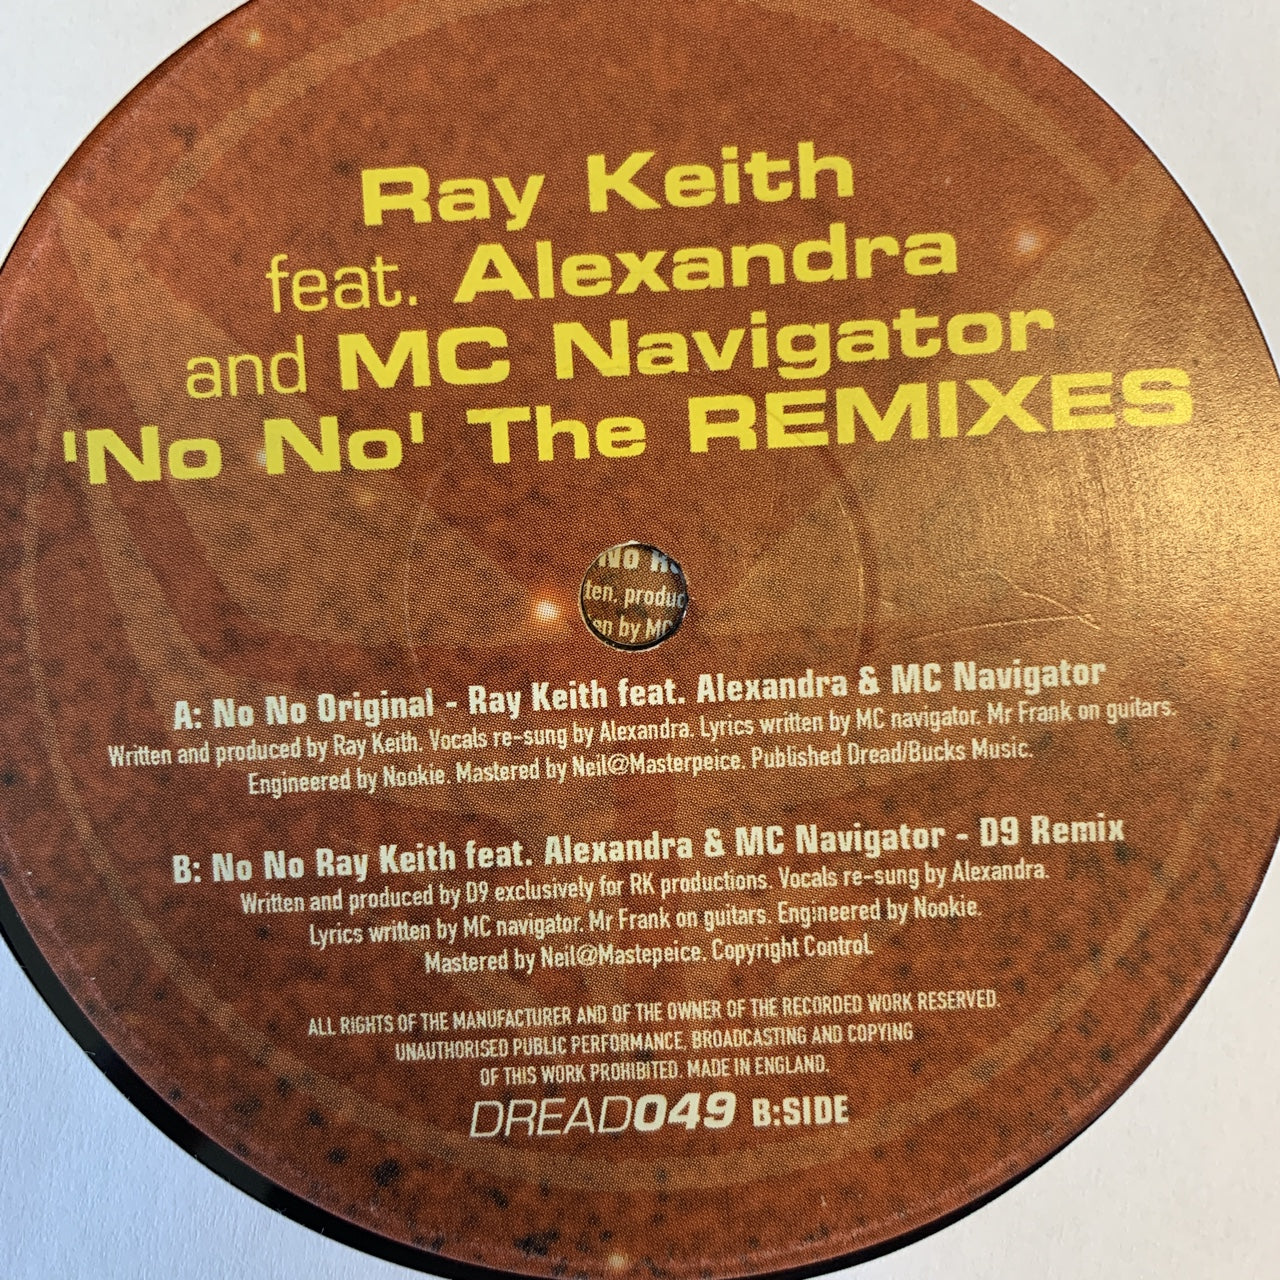 Ray Keith Feat Alexandra and MC Navigator “No No” The Remixes